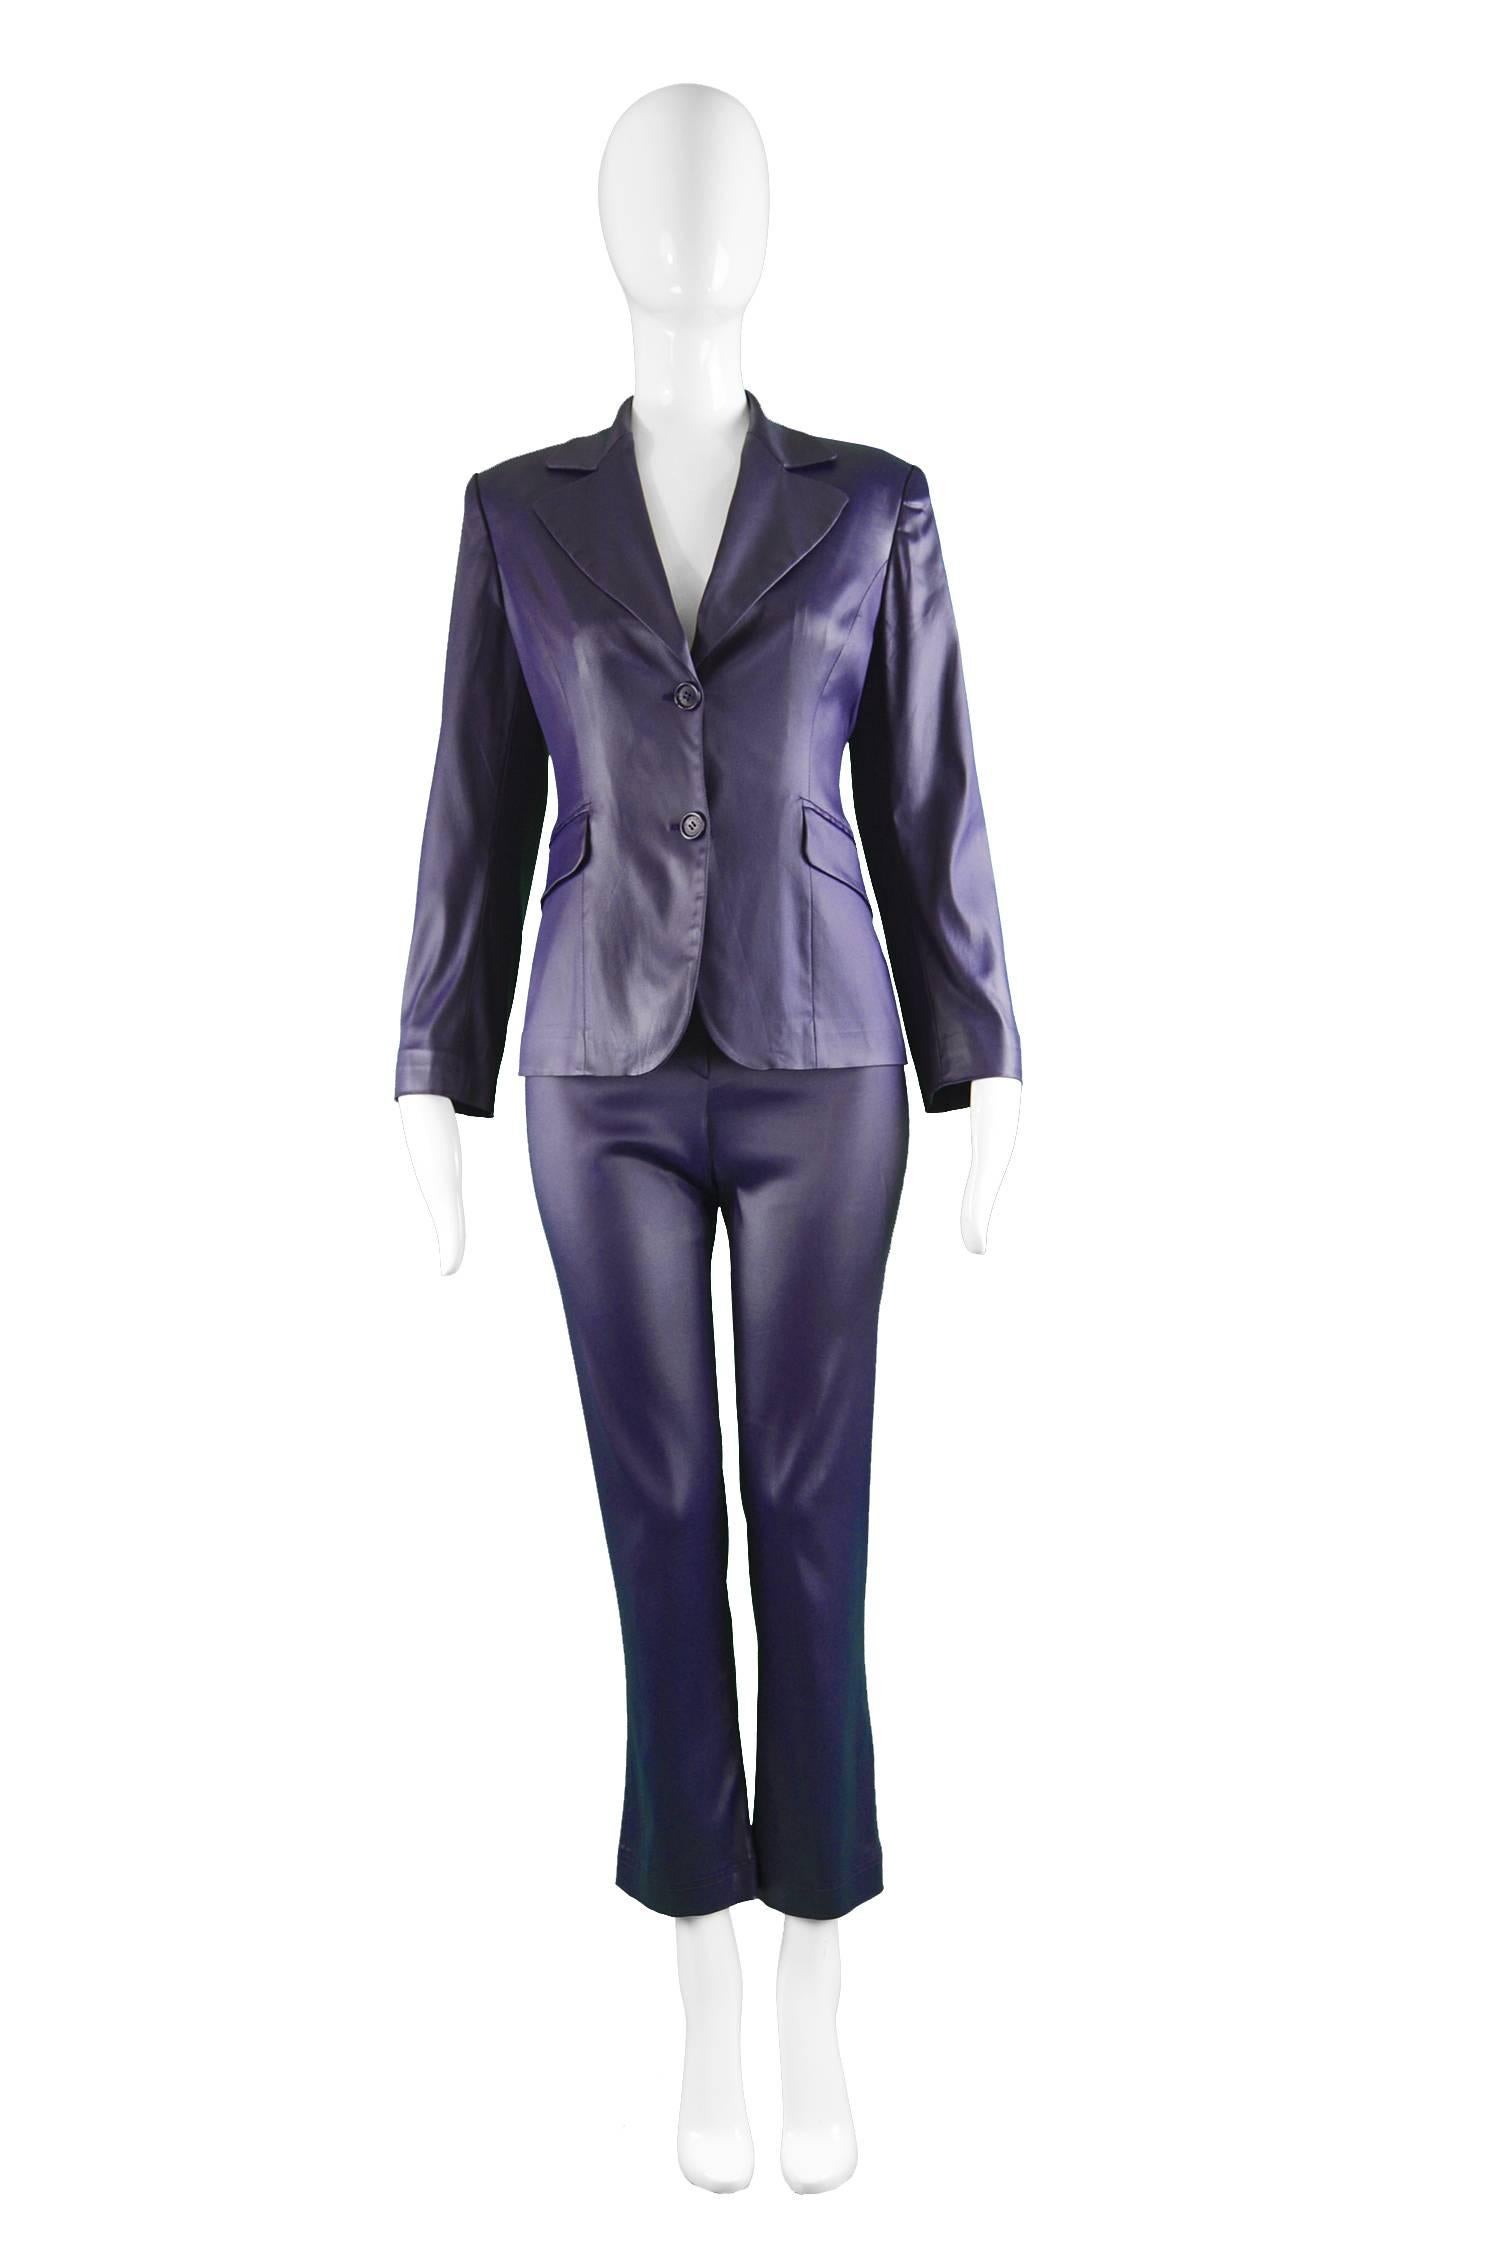 Rifat Ozbek Dark Purple Wet Look Vintage Pant Suit, 1990s

Estimated Size: petite size UK 6-8/ US 2-4/ EU 34-36. Runs quite narrow at the hip. Please check measurements.
Jacket 
Bust - 34” / 86cm (please allow a couple of inches room for